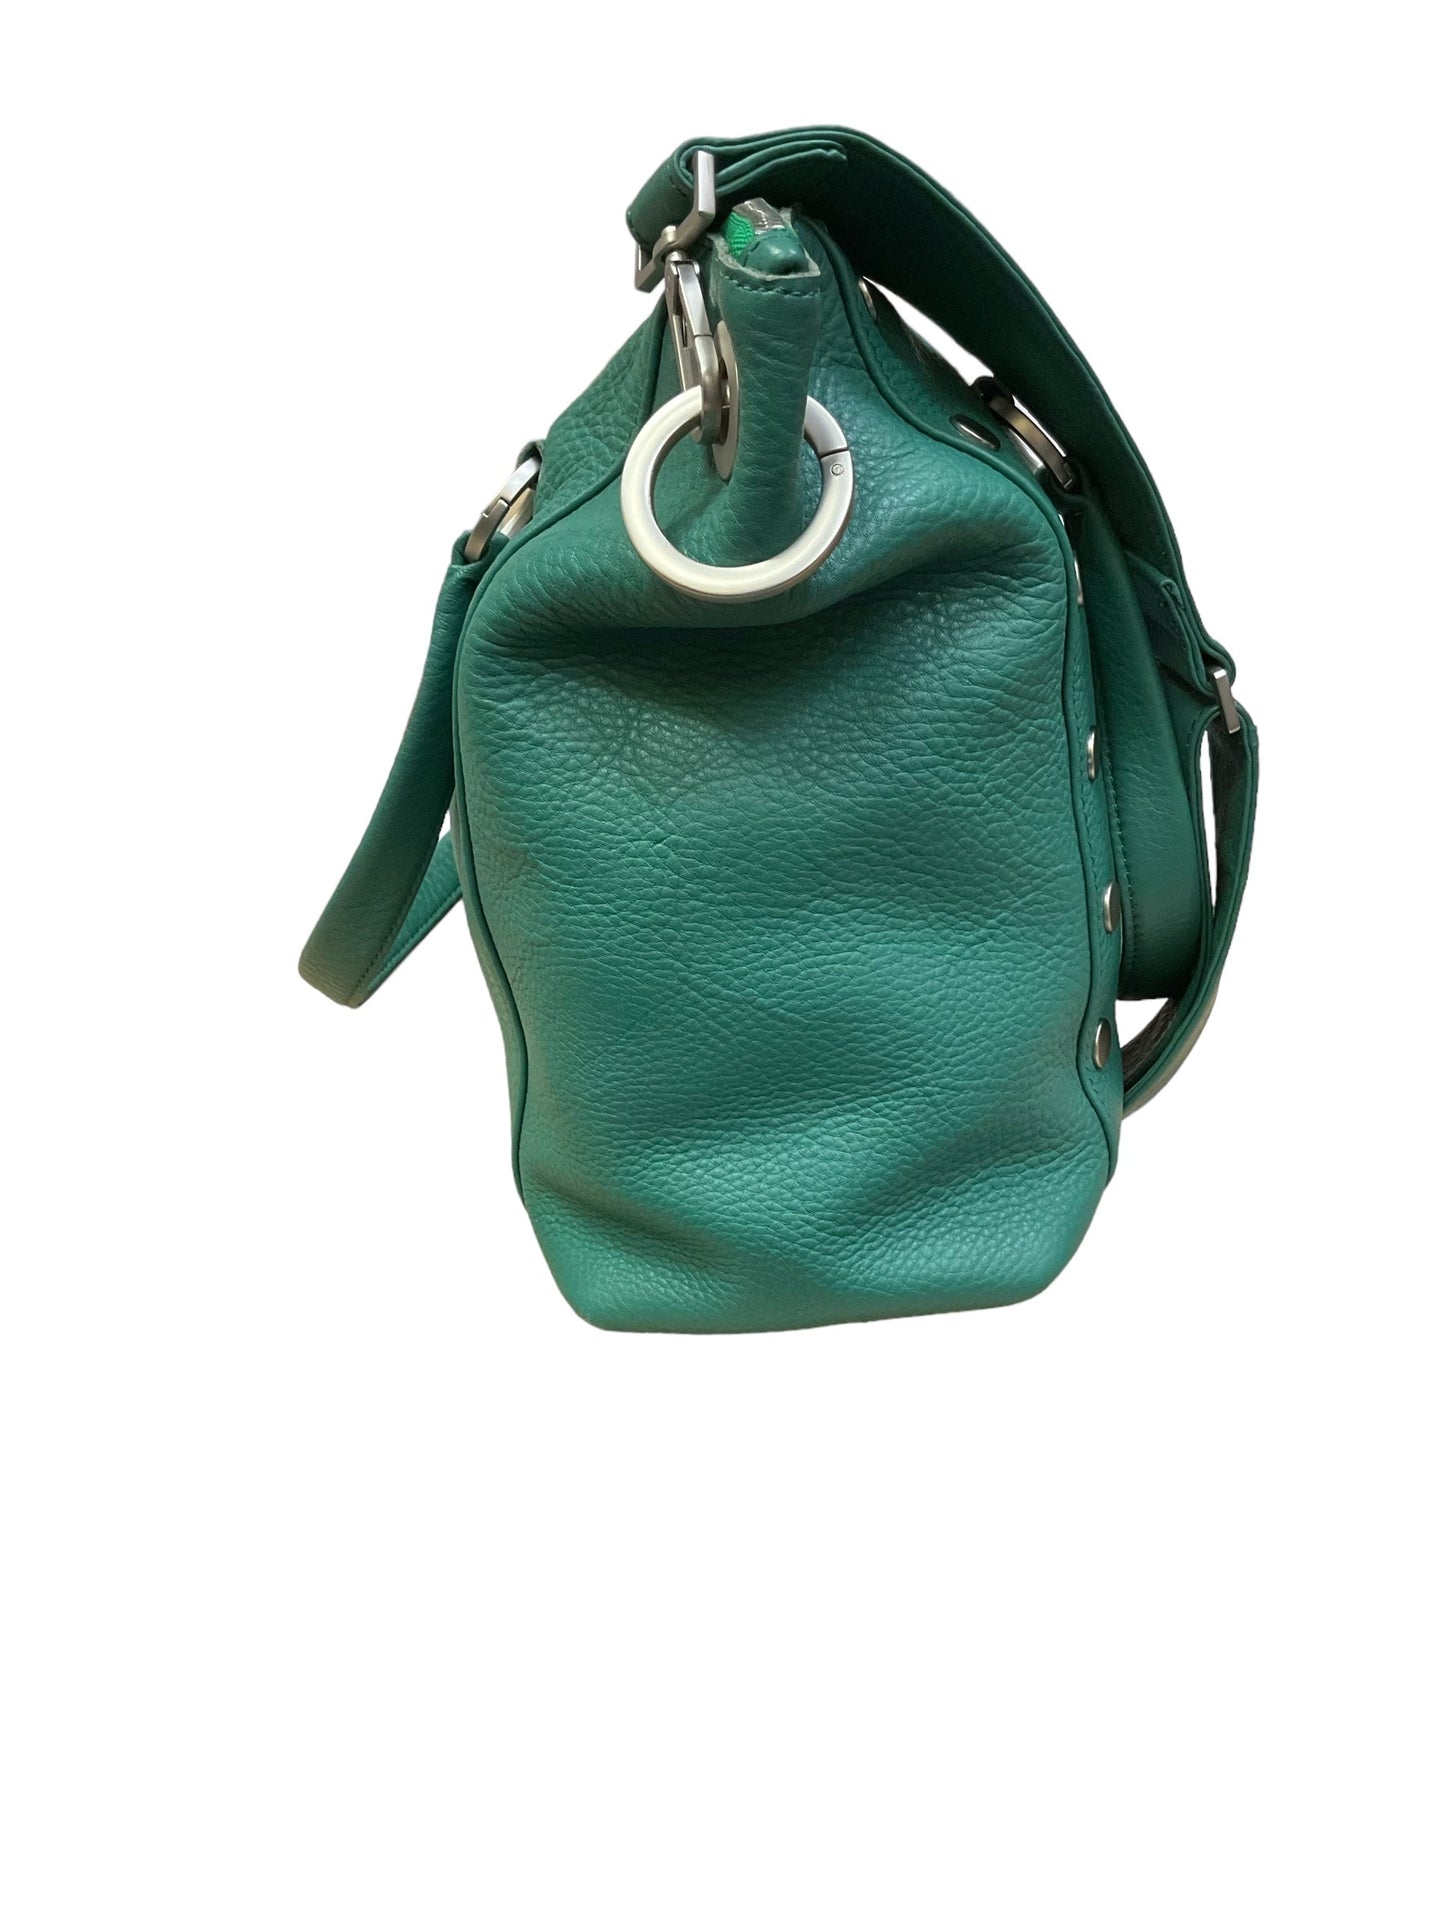 Handbag Designer Hammitt, Size Large